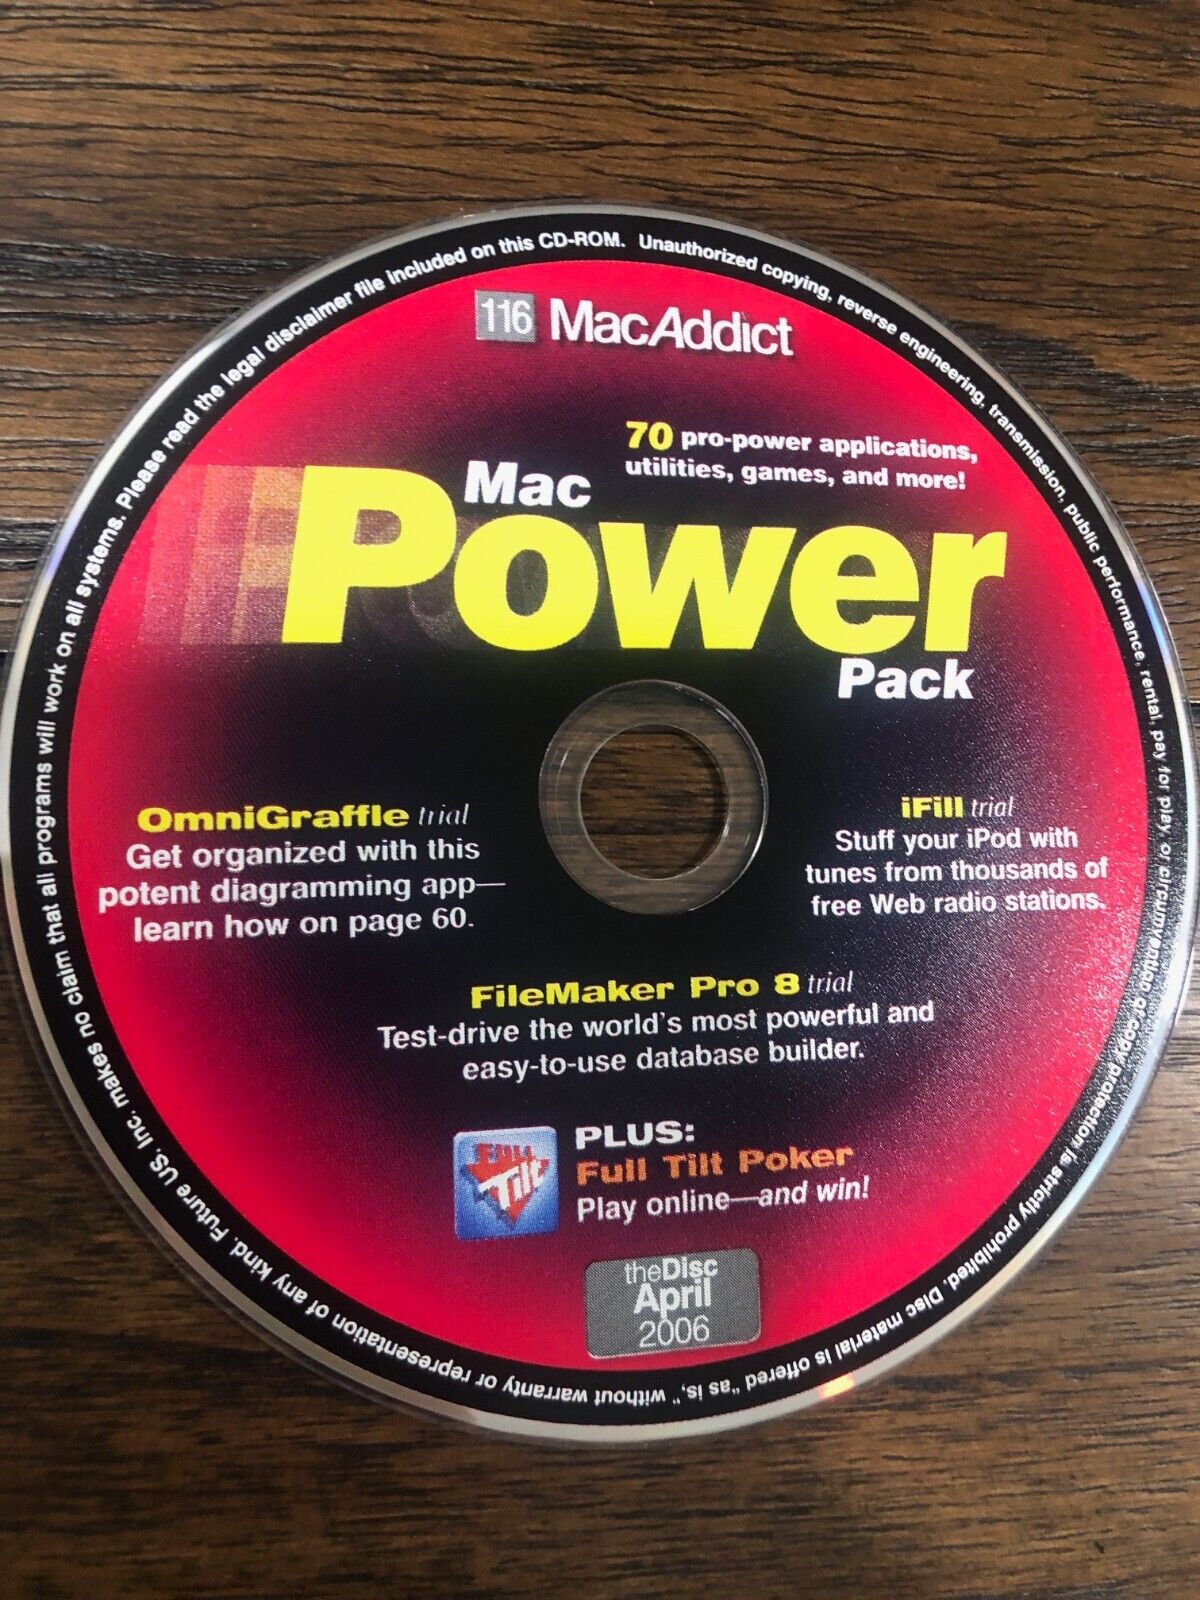 Vintage MAC Software CD - MacAddict April 06 - 70 apps software games utilities